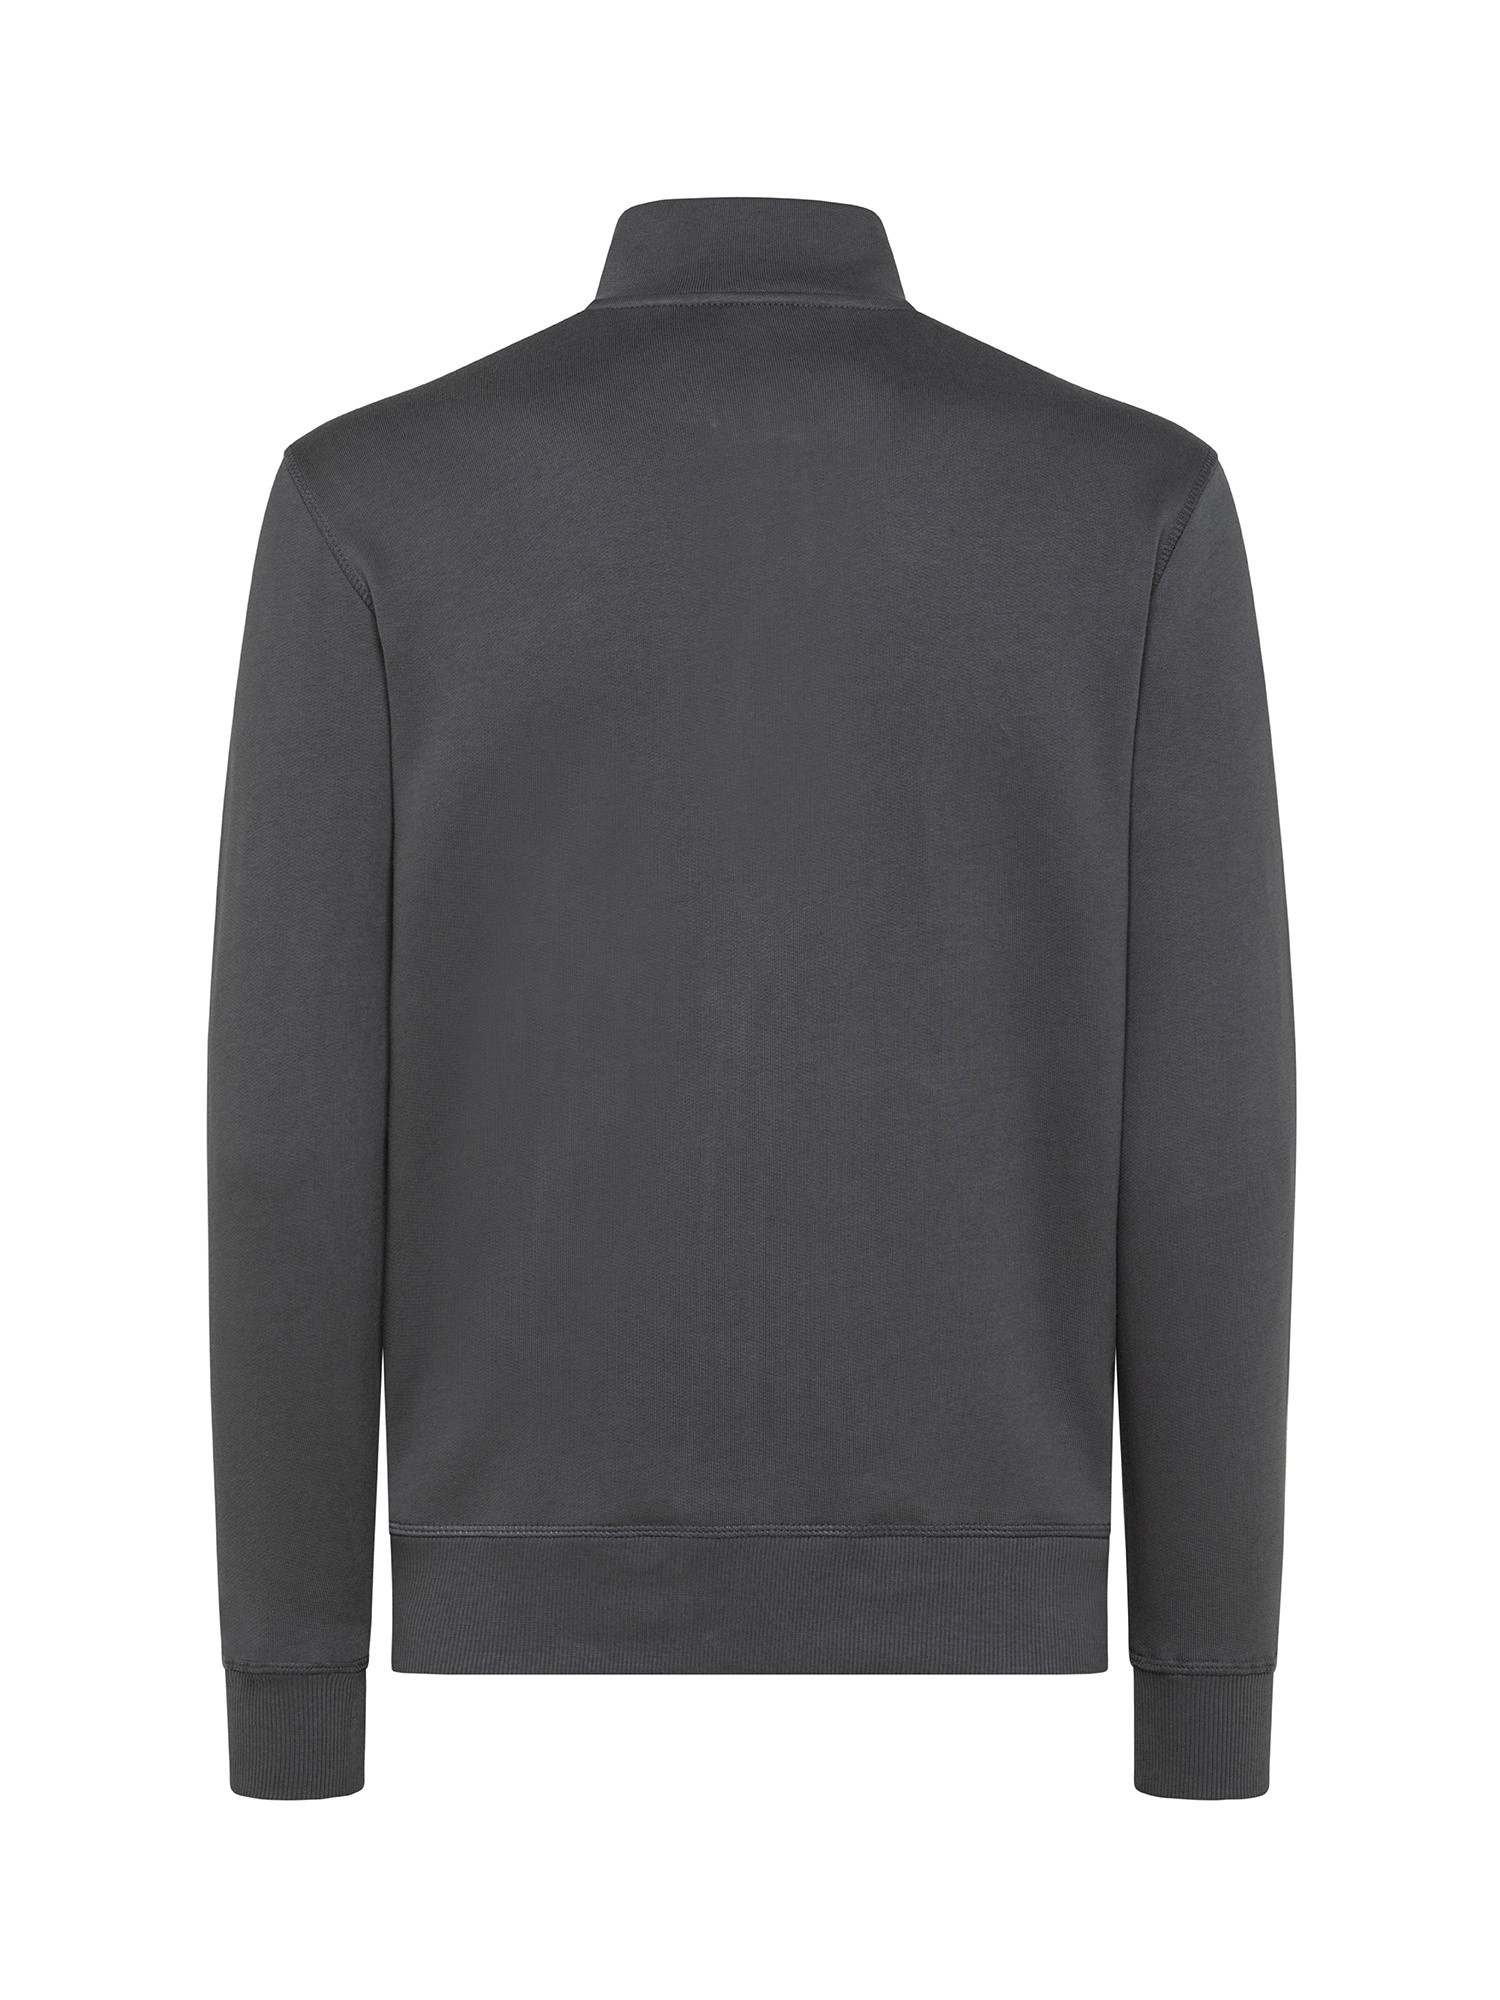 Full zip  sweatshirt with logo, Grey, large image number 1